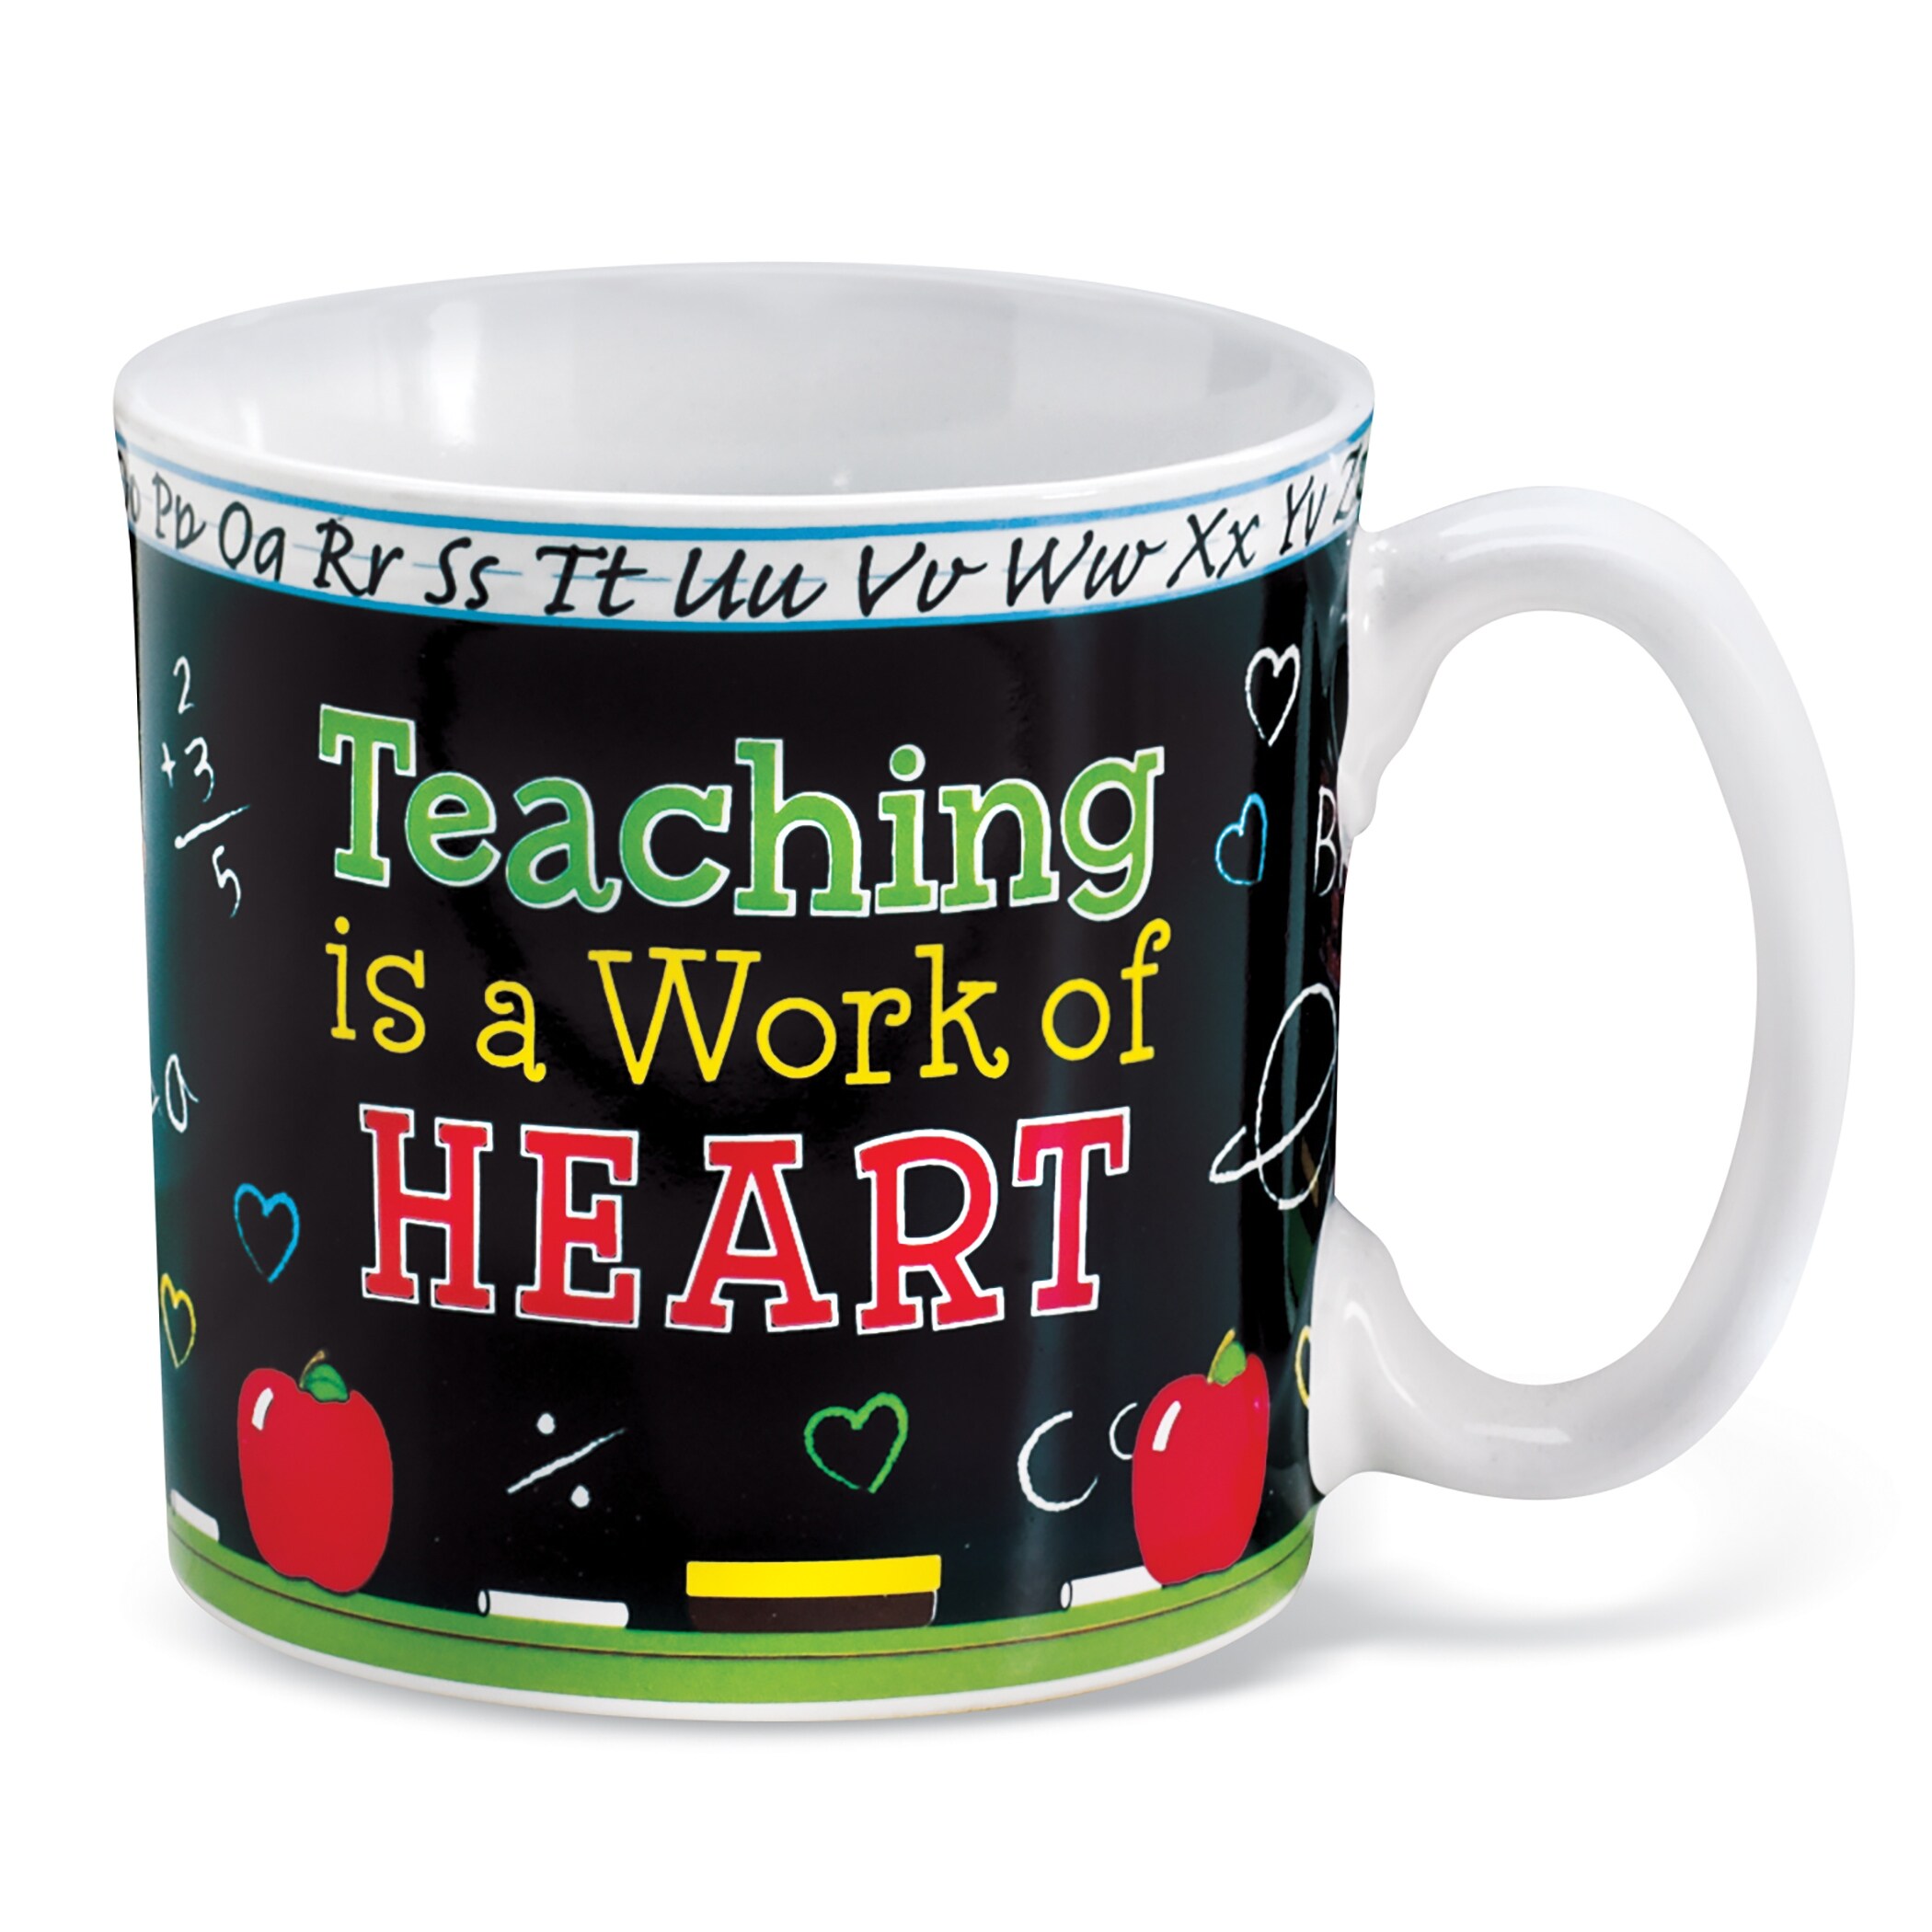 Teaching is a Work of Heart Ceramic Mug - 4.88 x 3.75 x 3.44